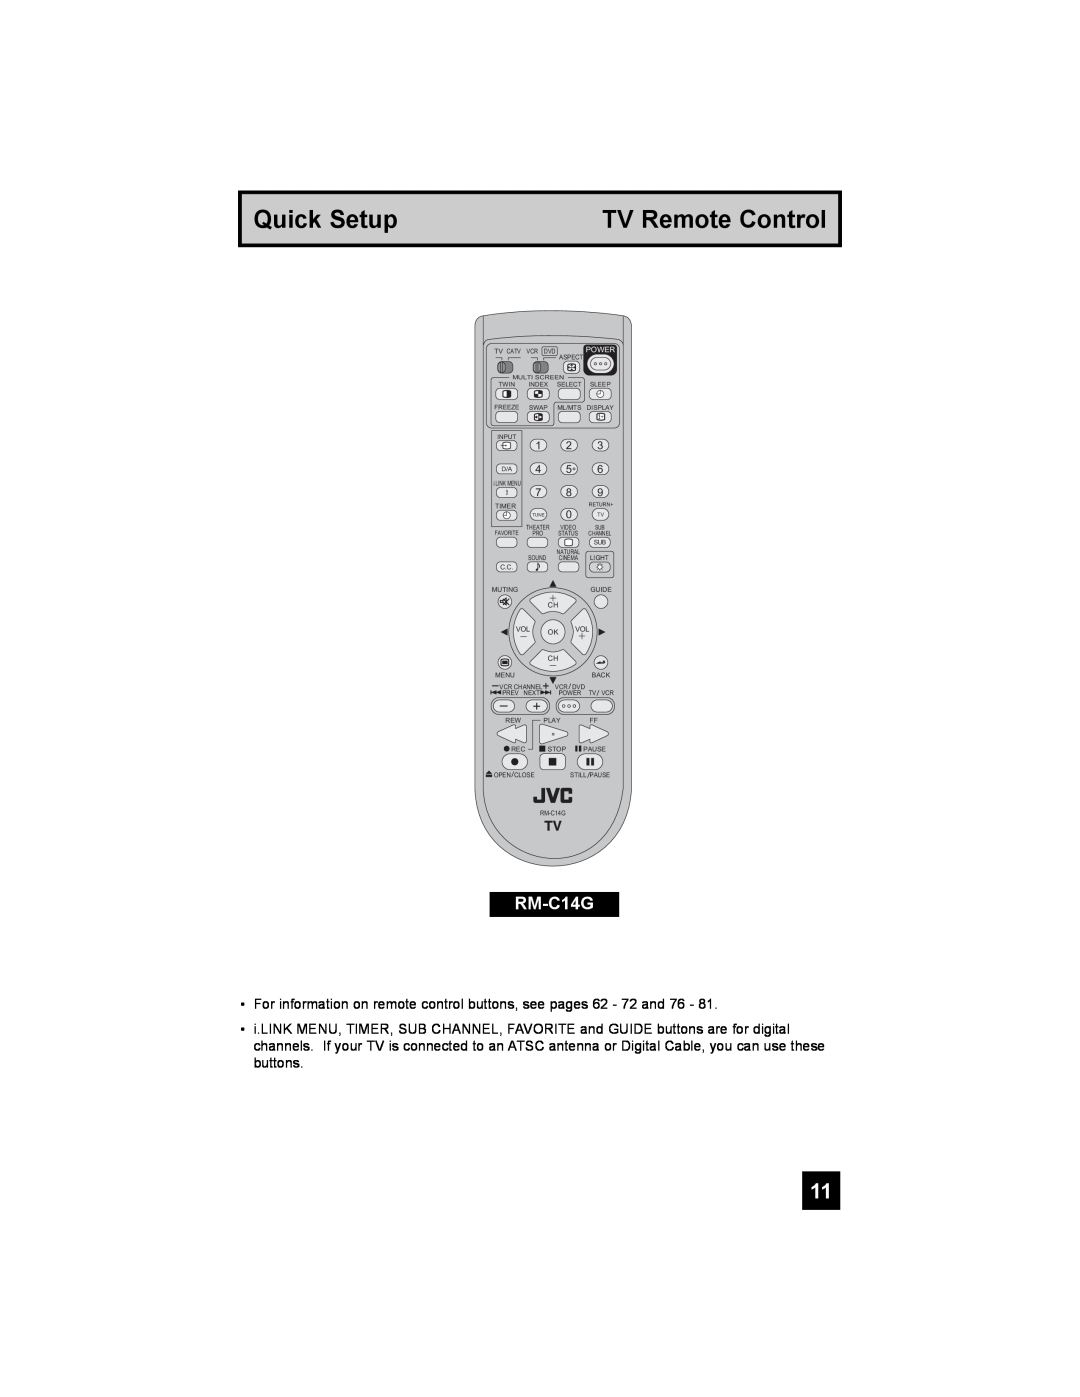 JVC PD-42X776 manual TV Remote Control, RM-C14G, Quick Setup 